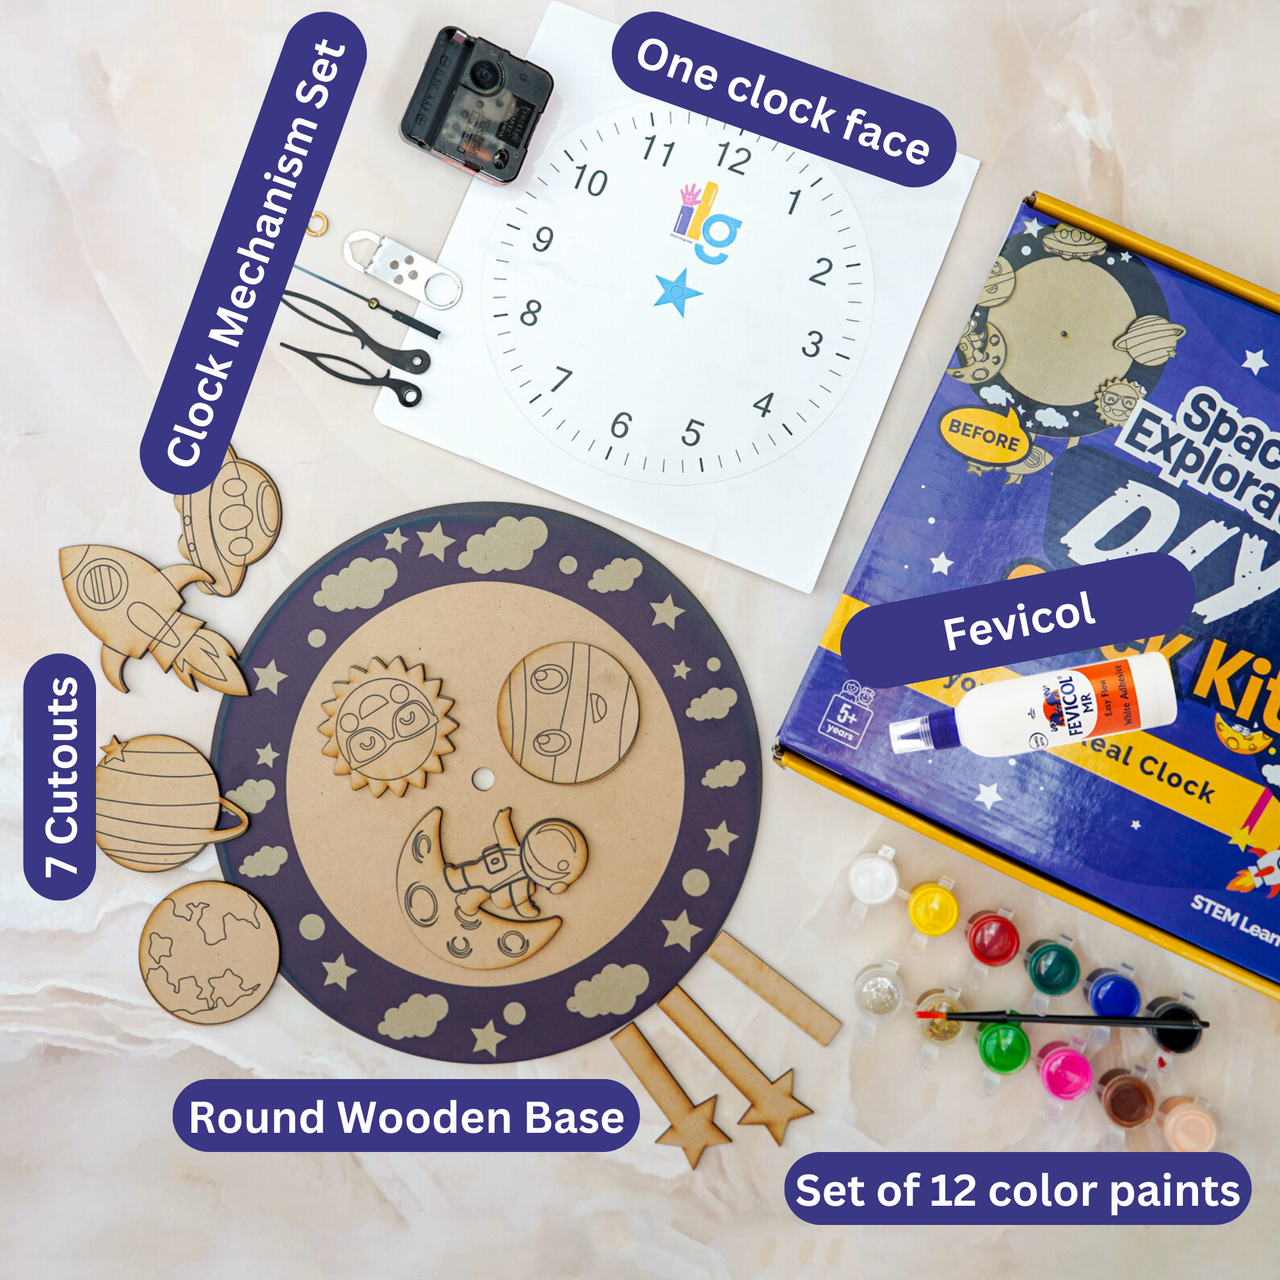 DIY Clock Kit For Kids